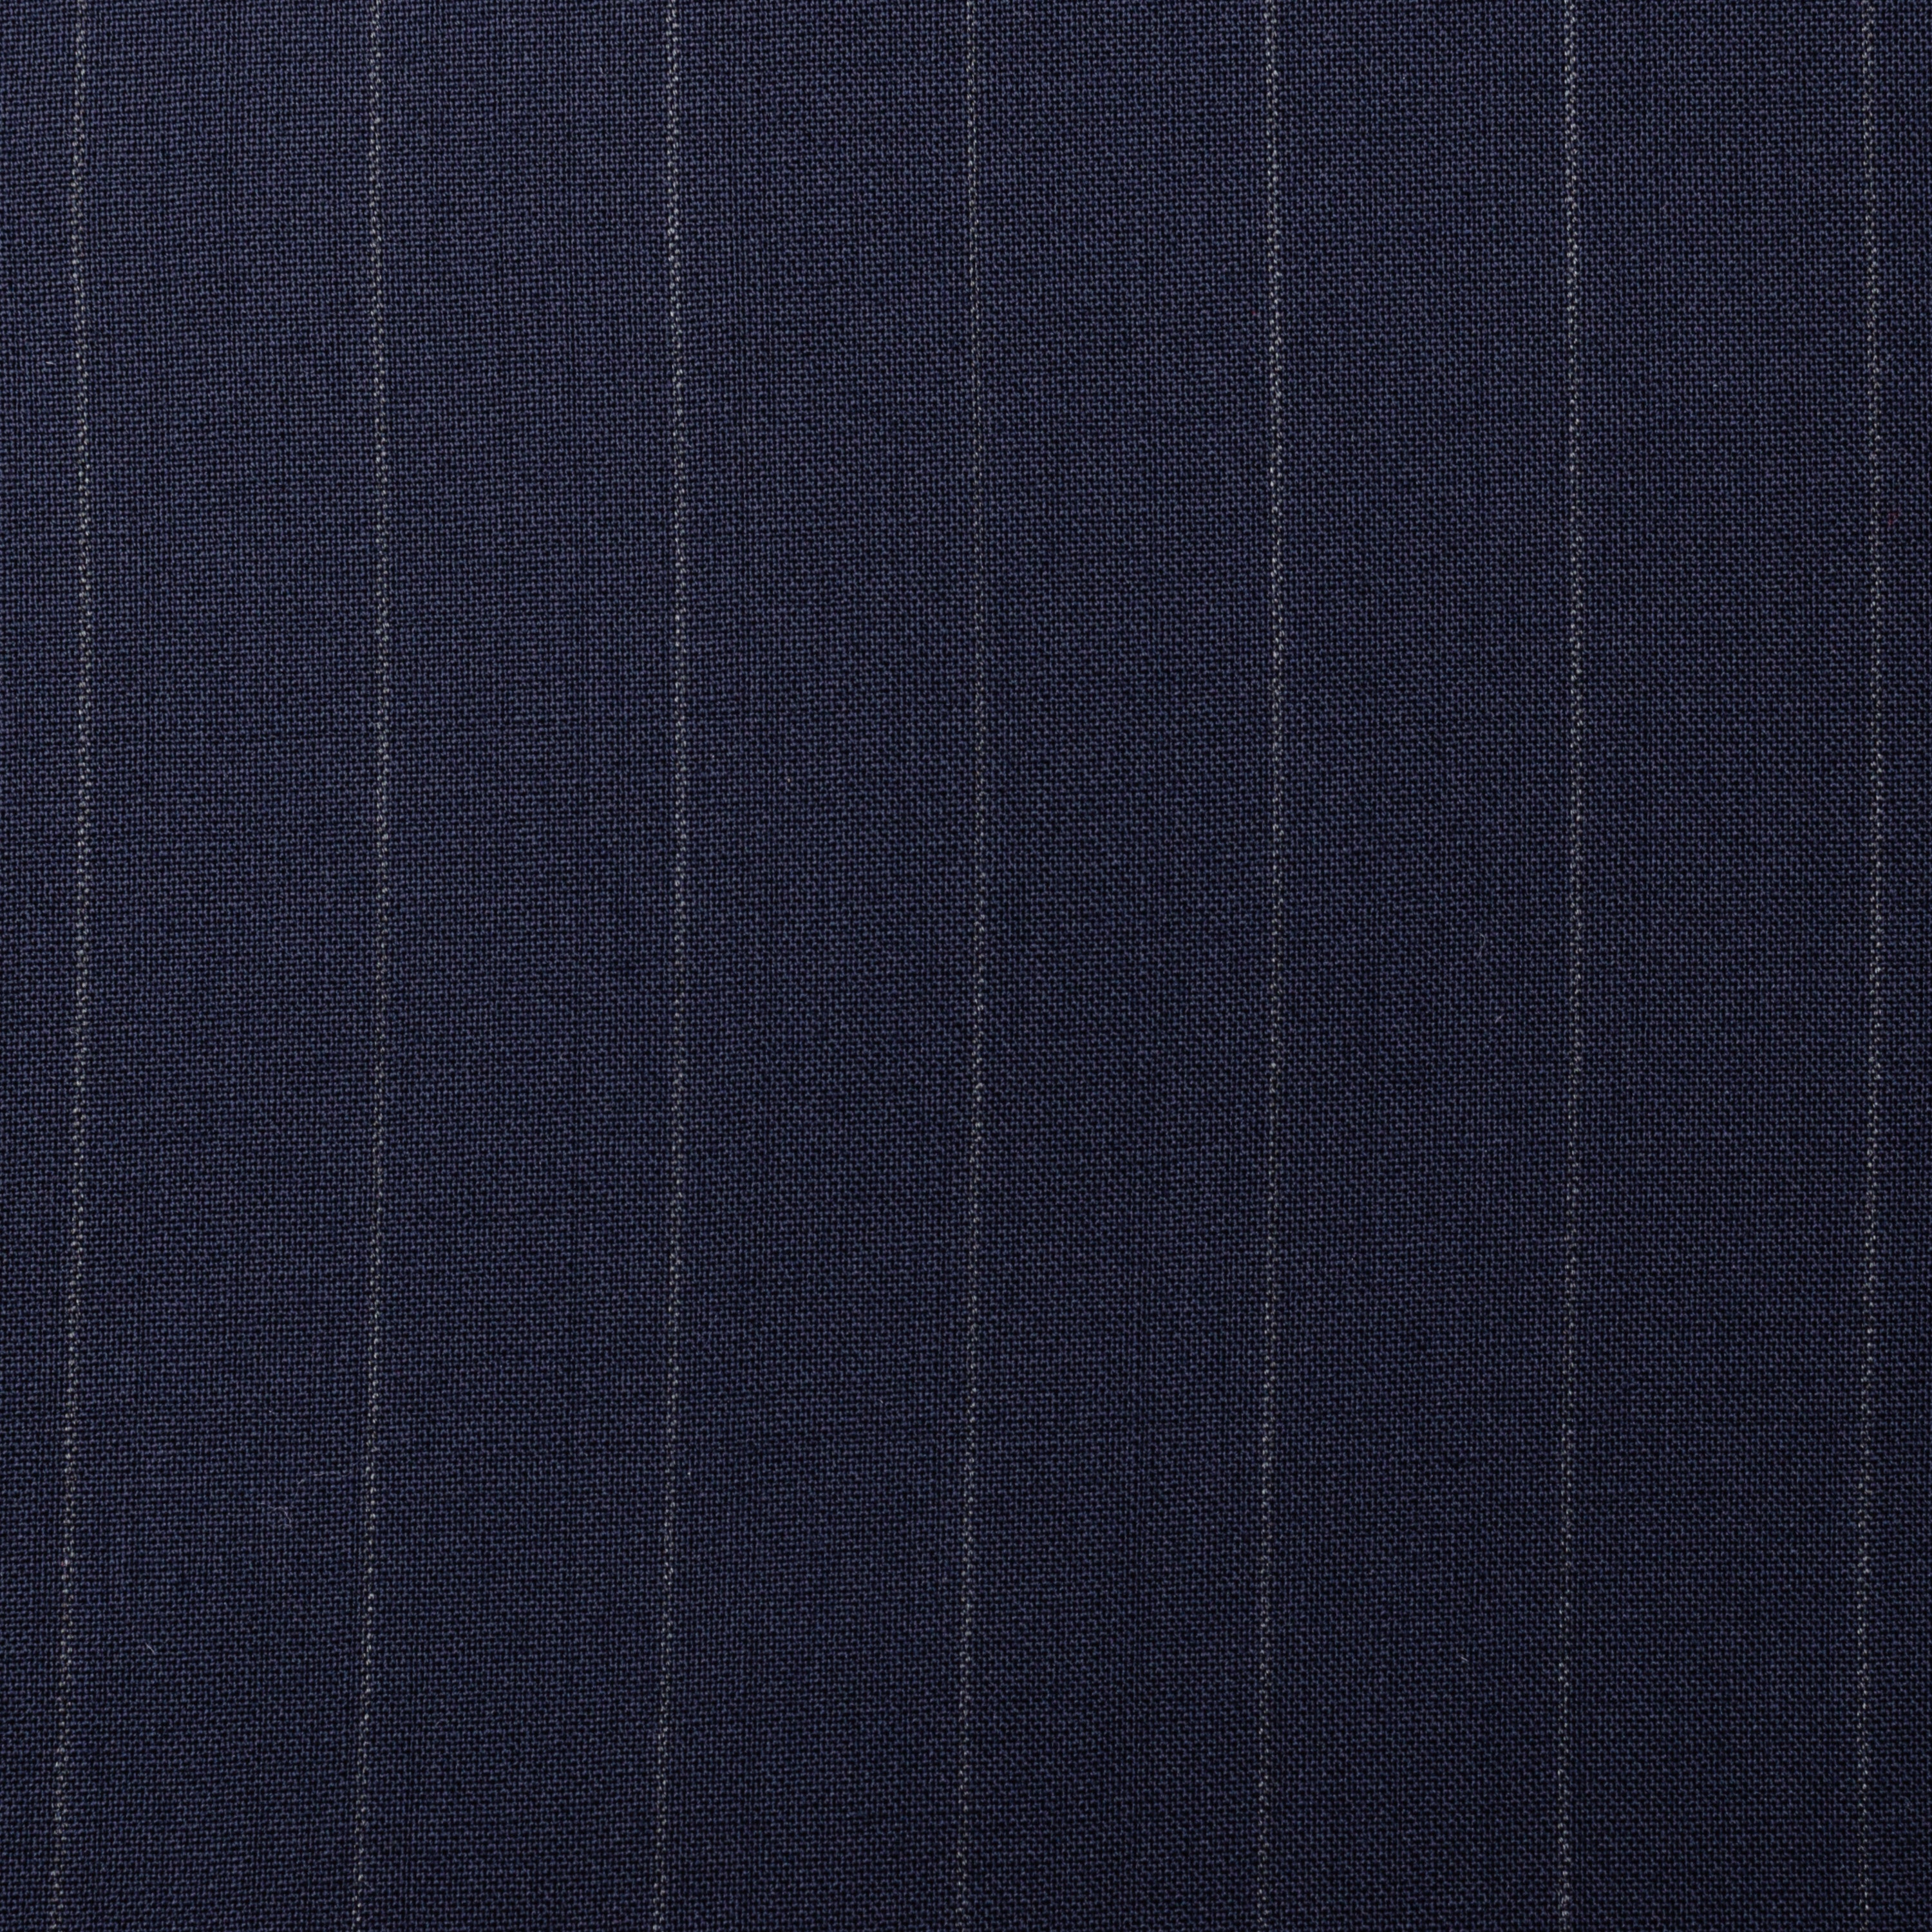 Sartoria CHIAIA Bespoke Handmade Blue Striped Loro Piana Wool Suit 62 NEW 52 Big